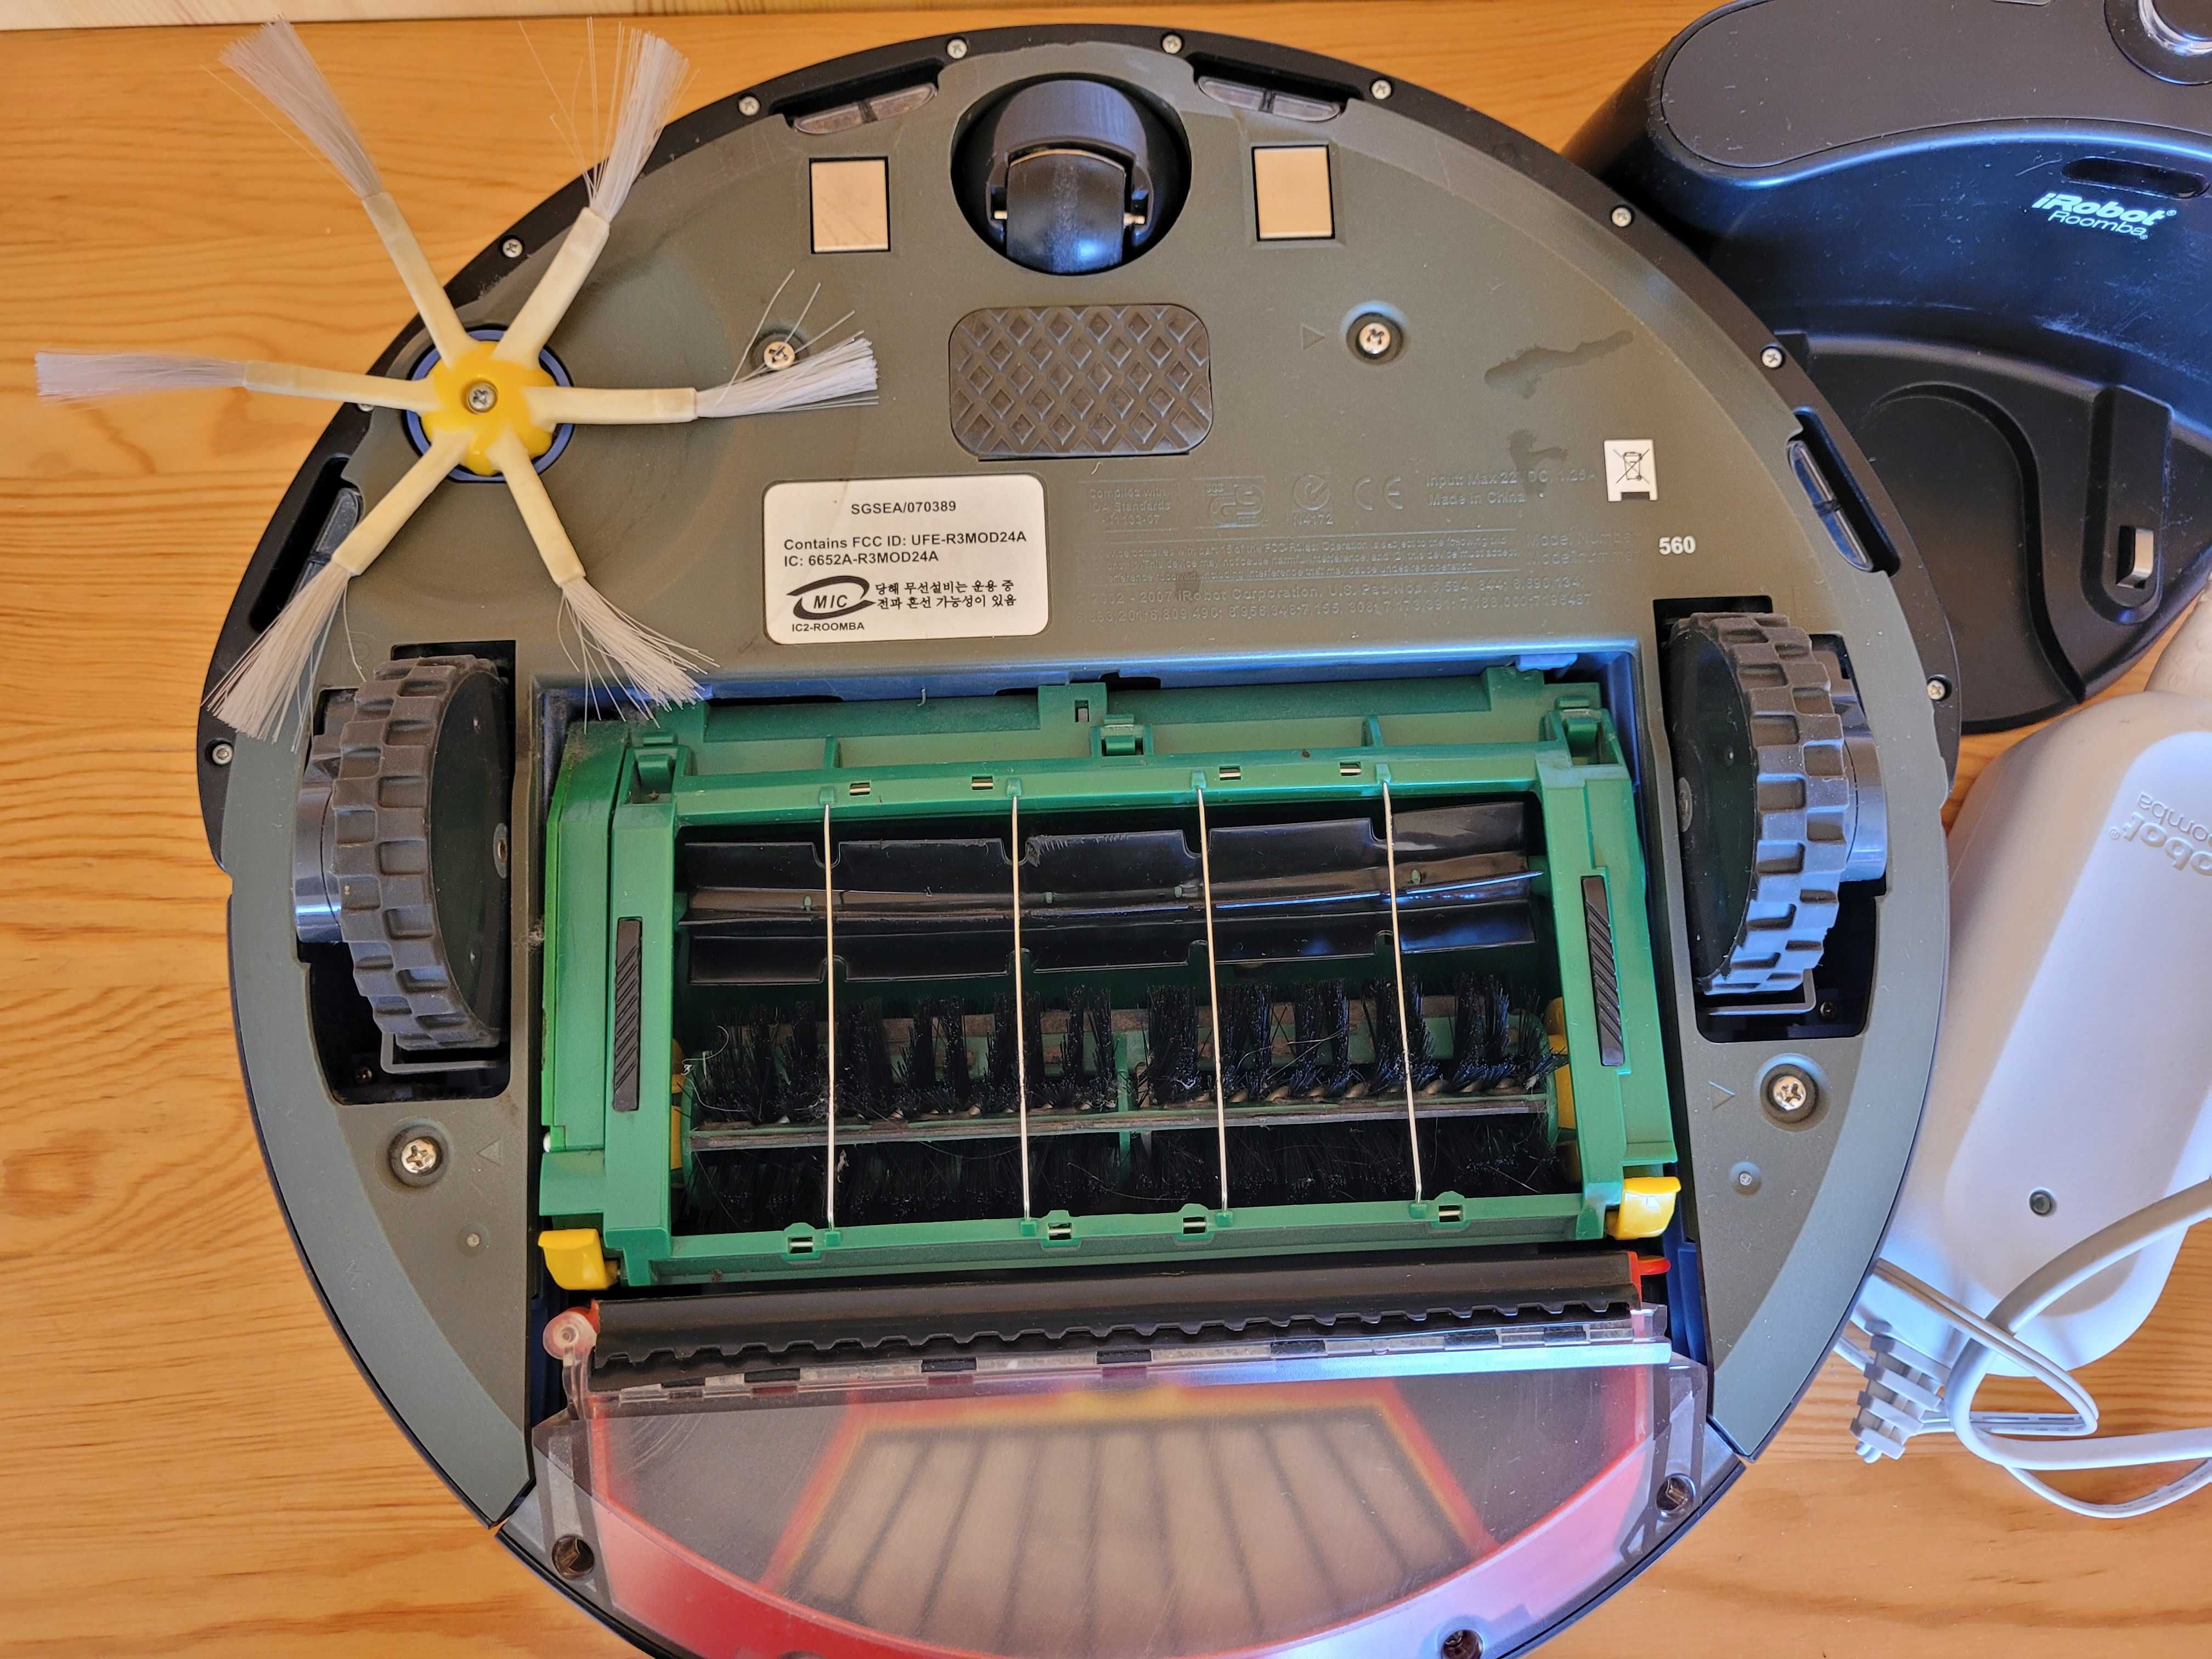 iRobot Roomba R560